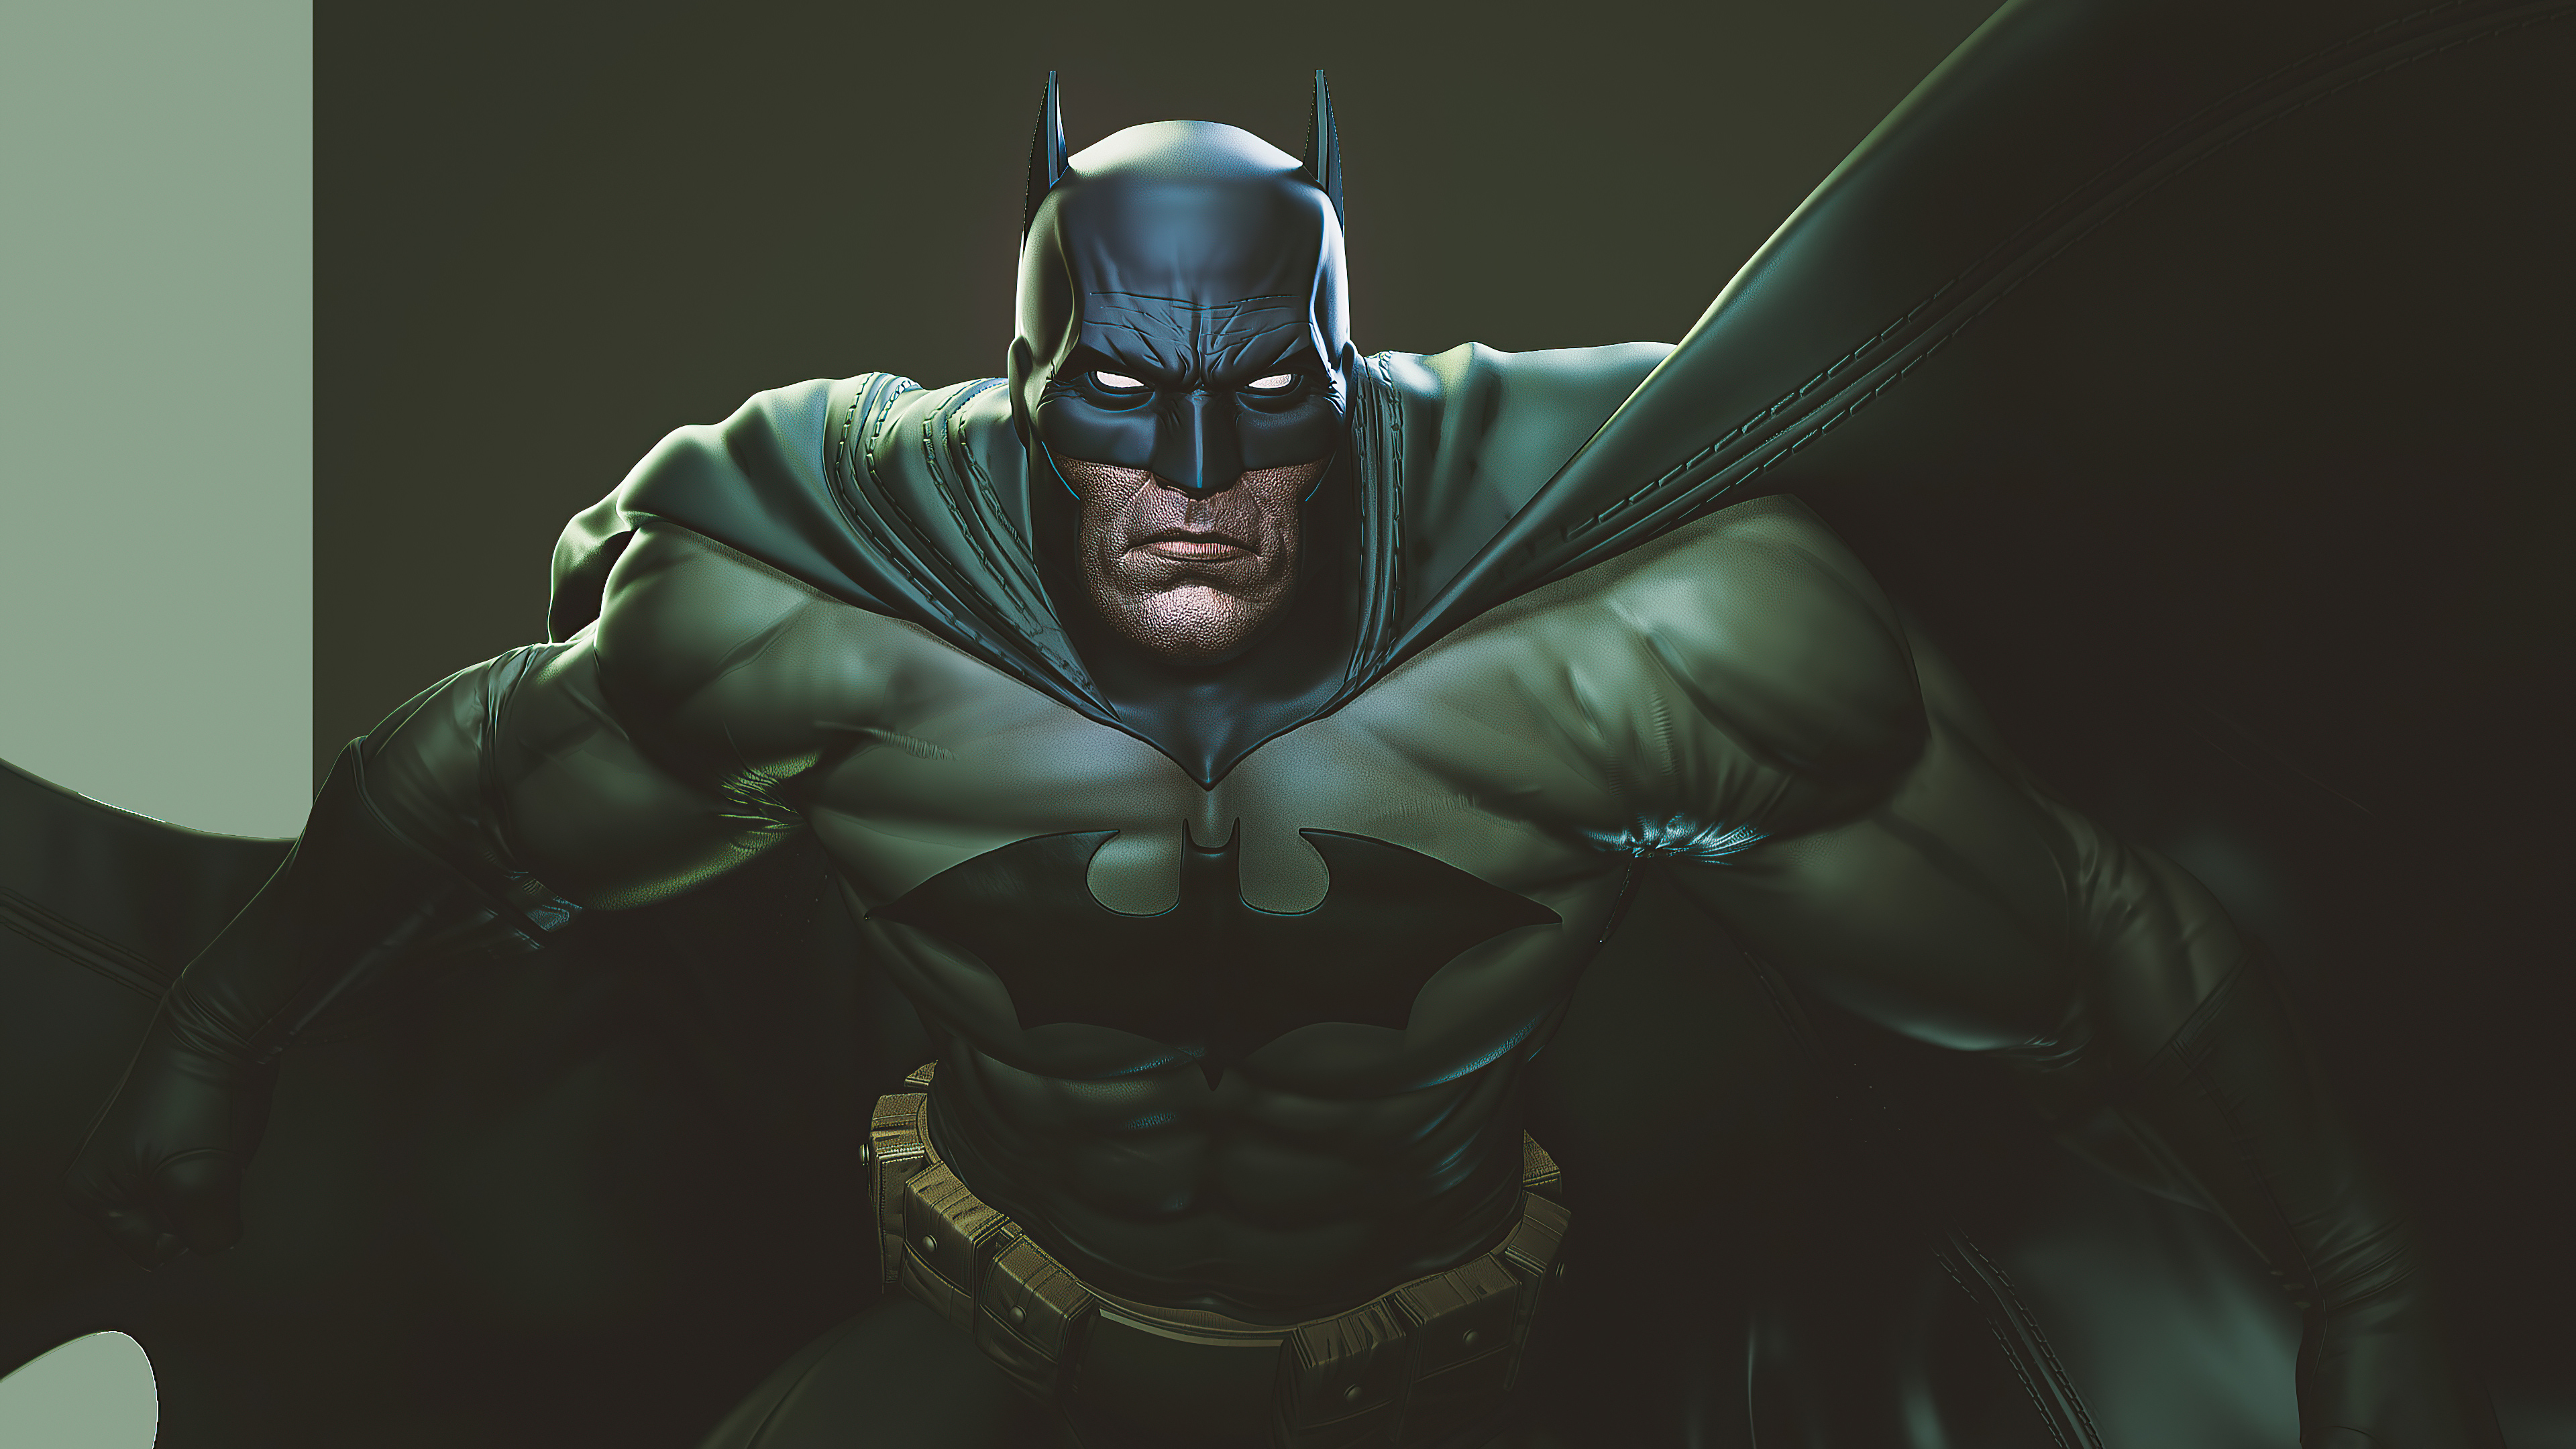 Green Batman DC Comic Wallpaper, HD Superheroes 4K Wallpapers, Images,  Photos and Background - Wallpapers Den